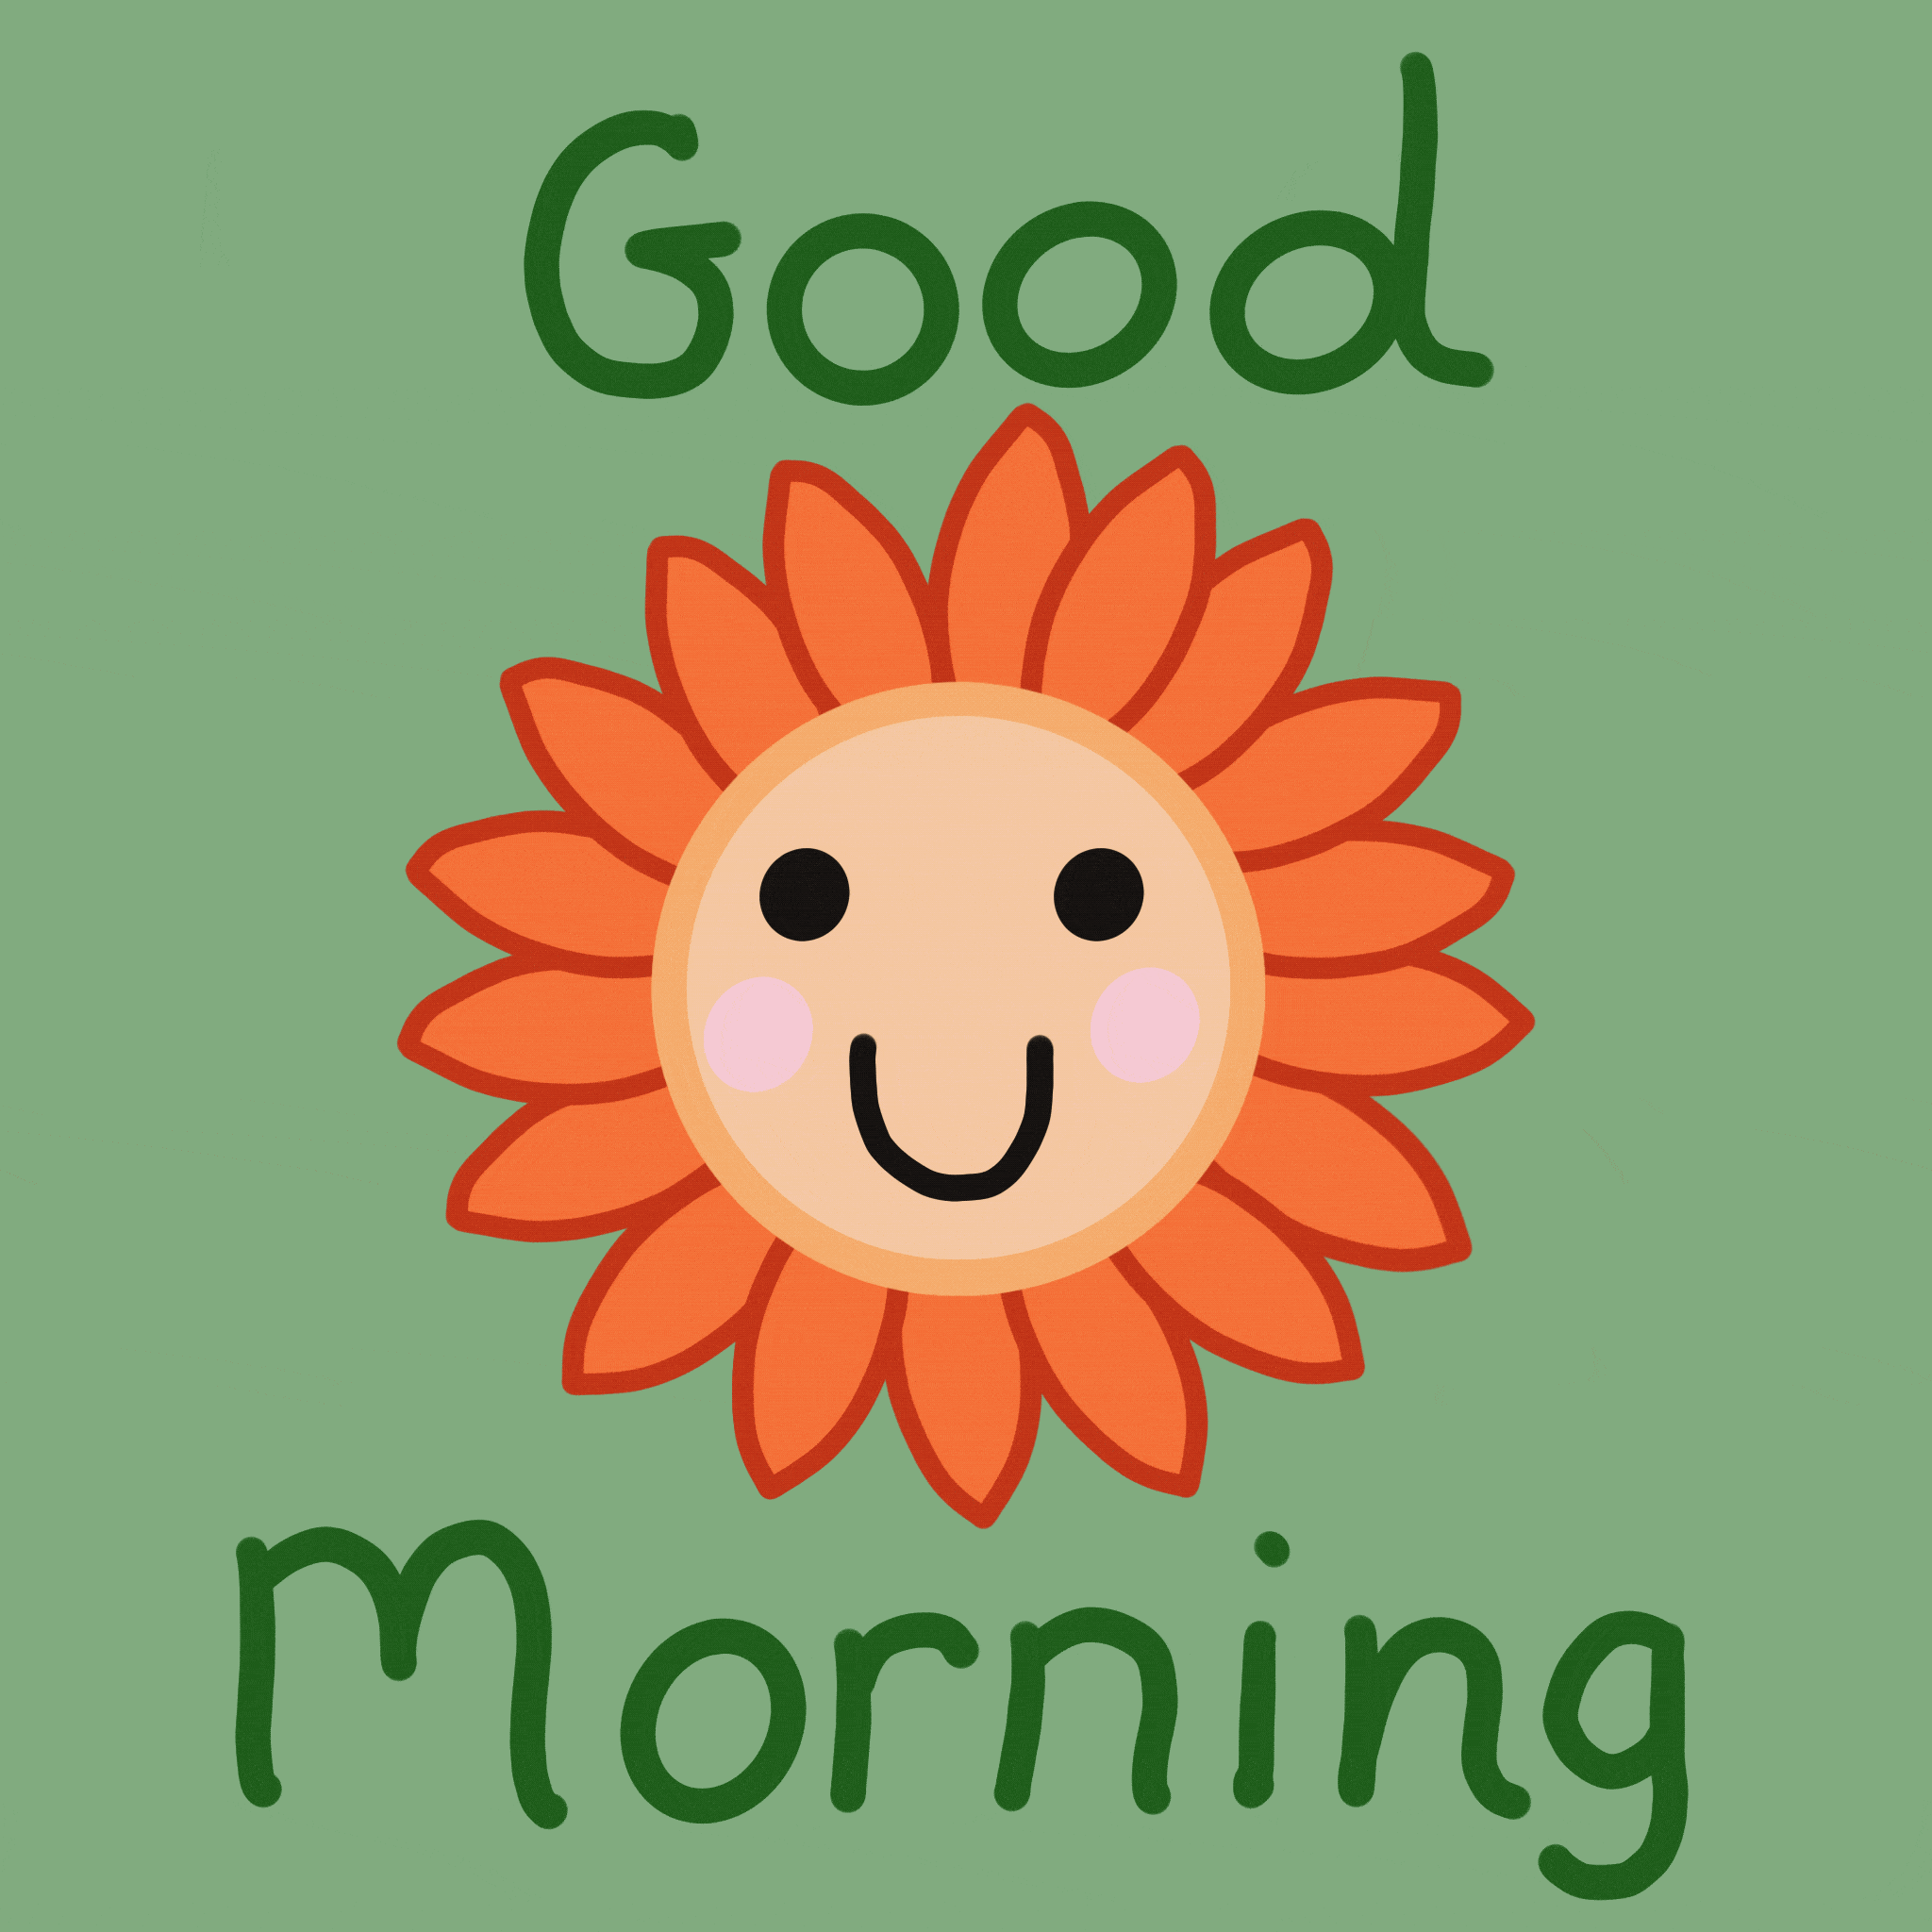 Good Morning Gif,Greeting Gif,Period Gif,Waking Up Gif,Day Gif,Daylight Gif,However Gif,Starting The Day Gif,Sunrise Gif